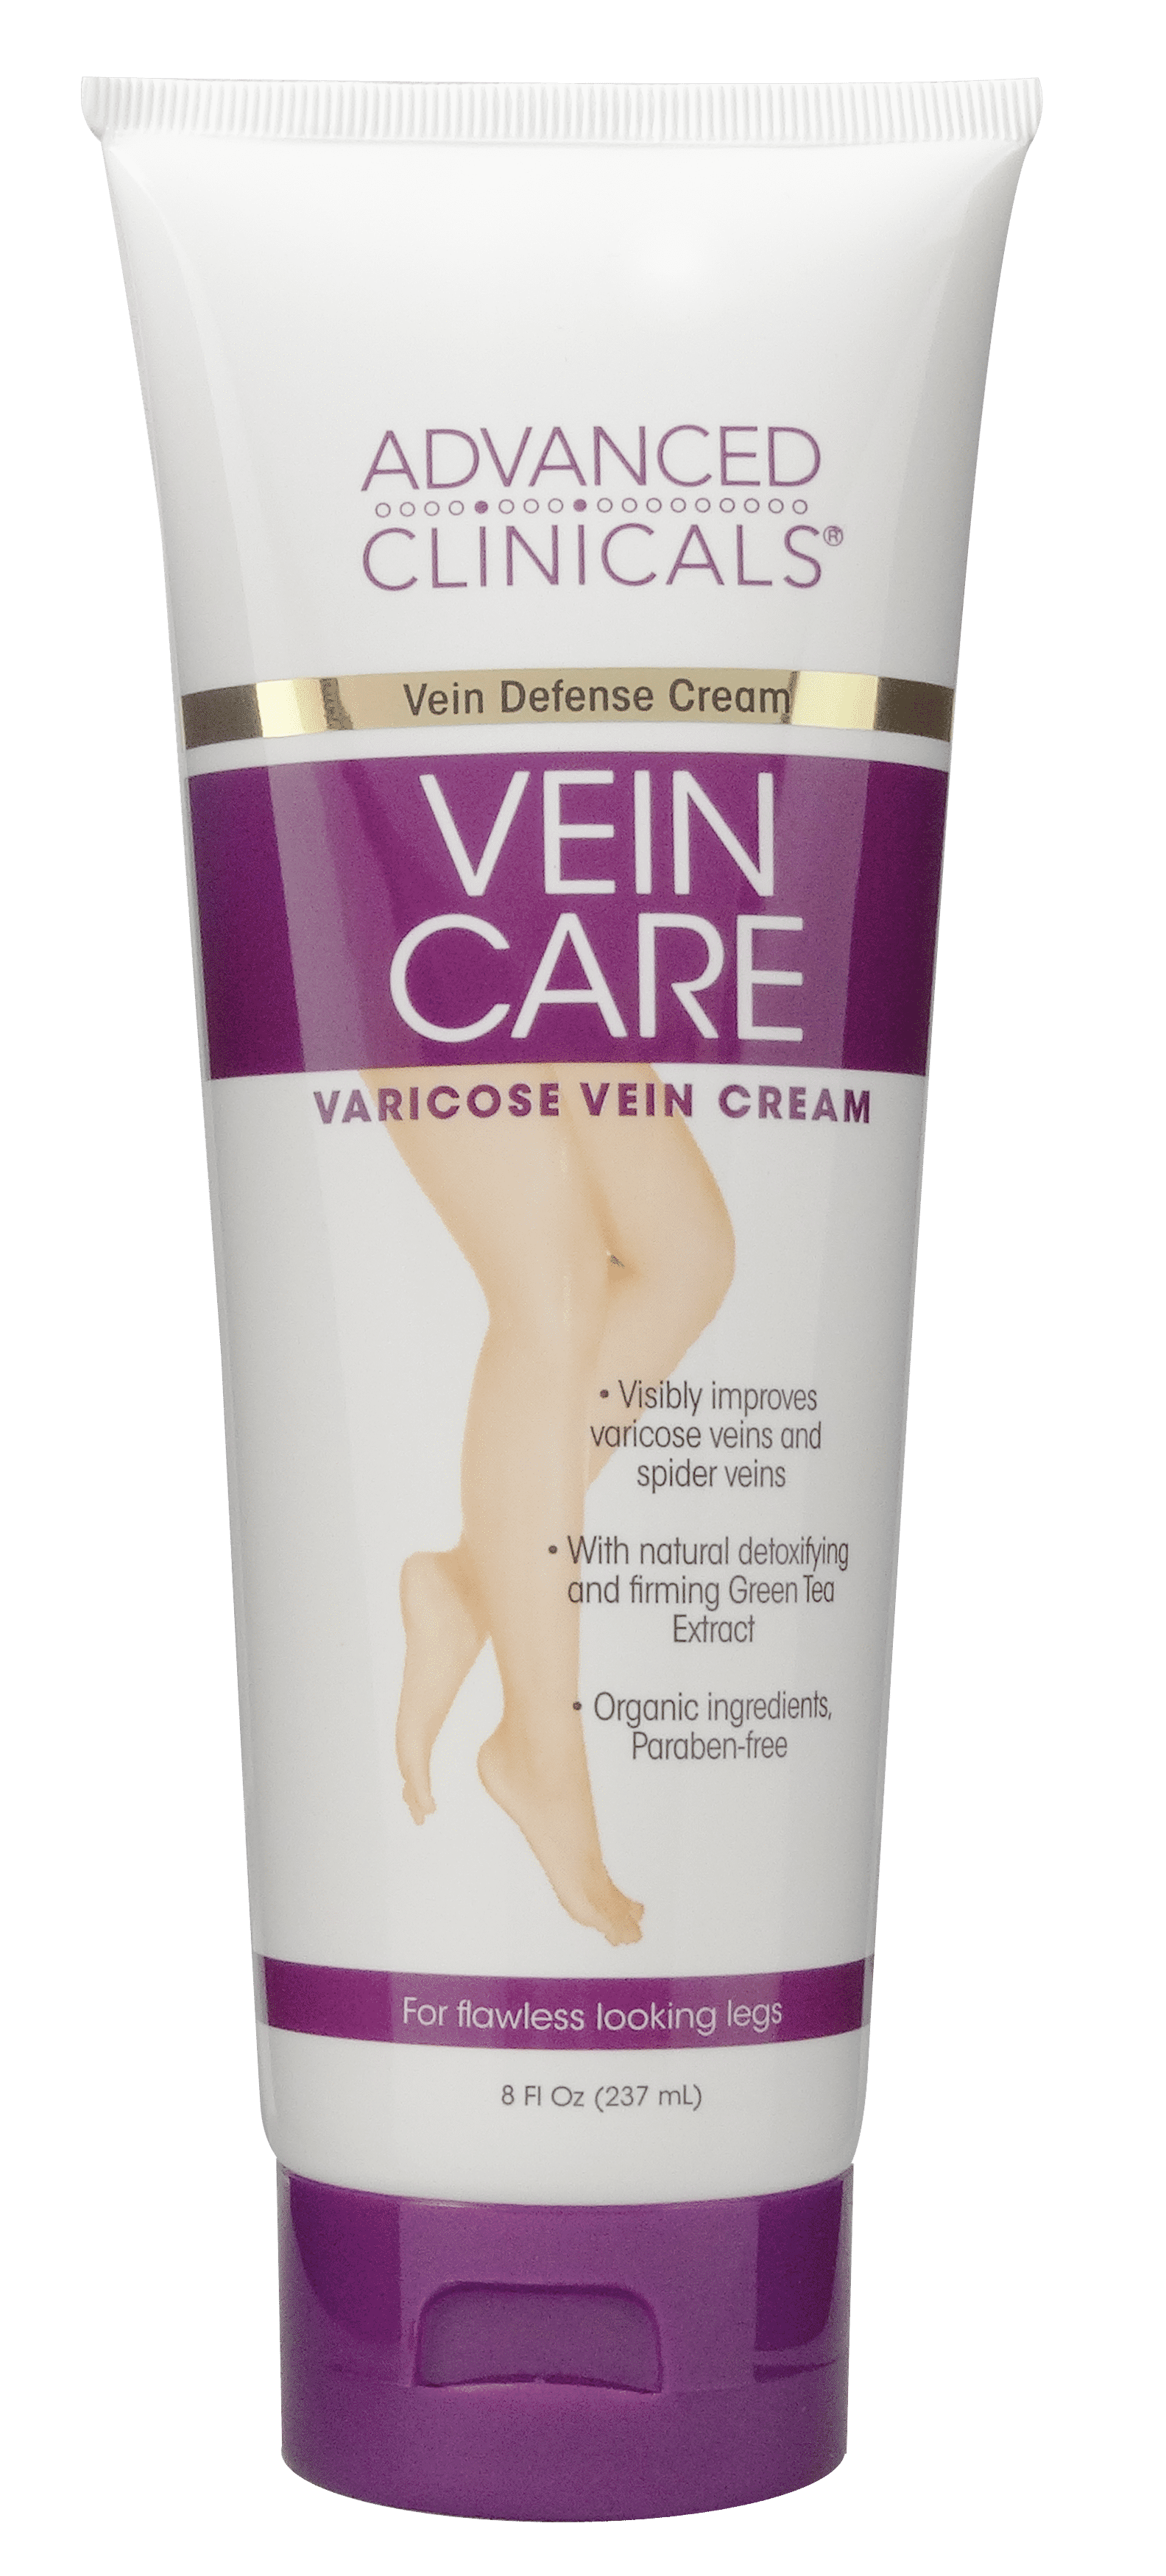 Changes of elastic and collagen fibers in varicose veins